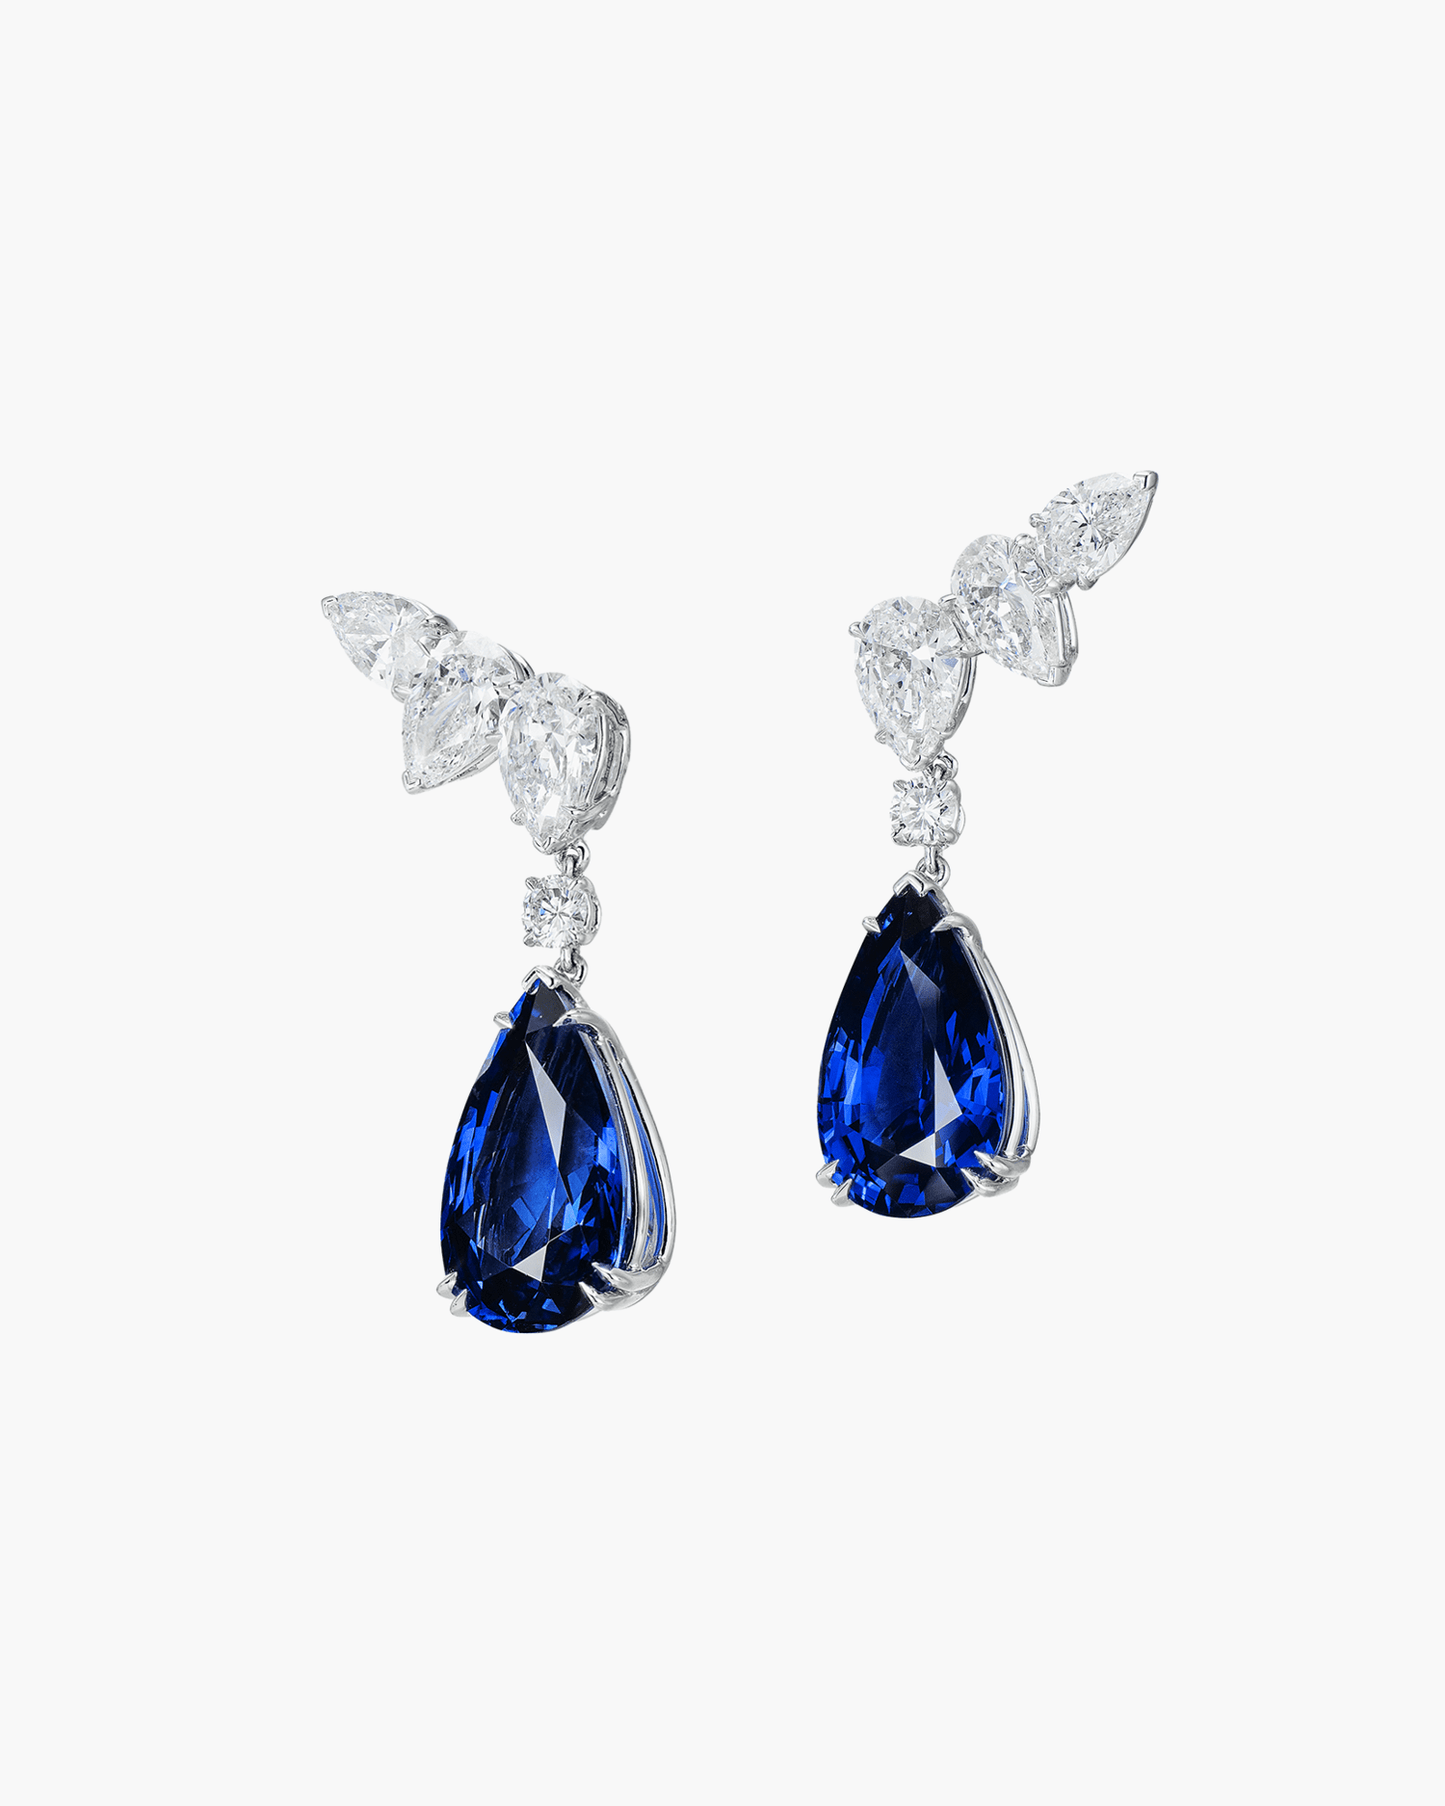 10.12 carat Pear Shape Ceylon Sapphire and Diamond Earrings